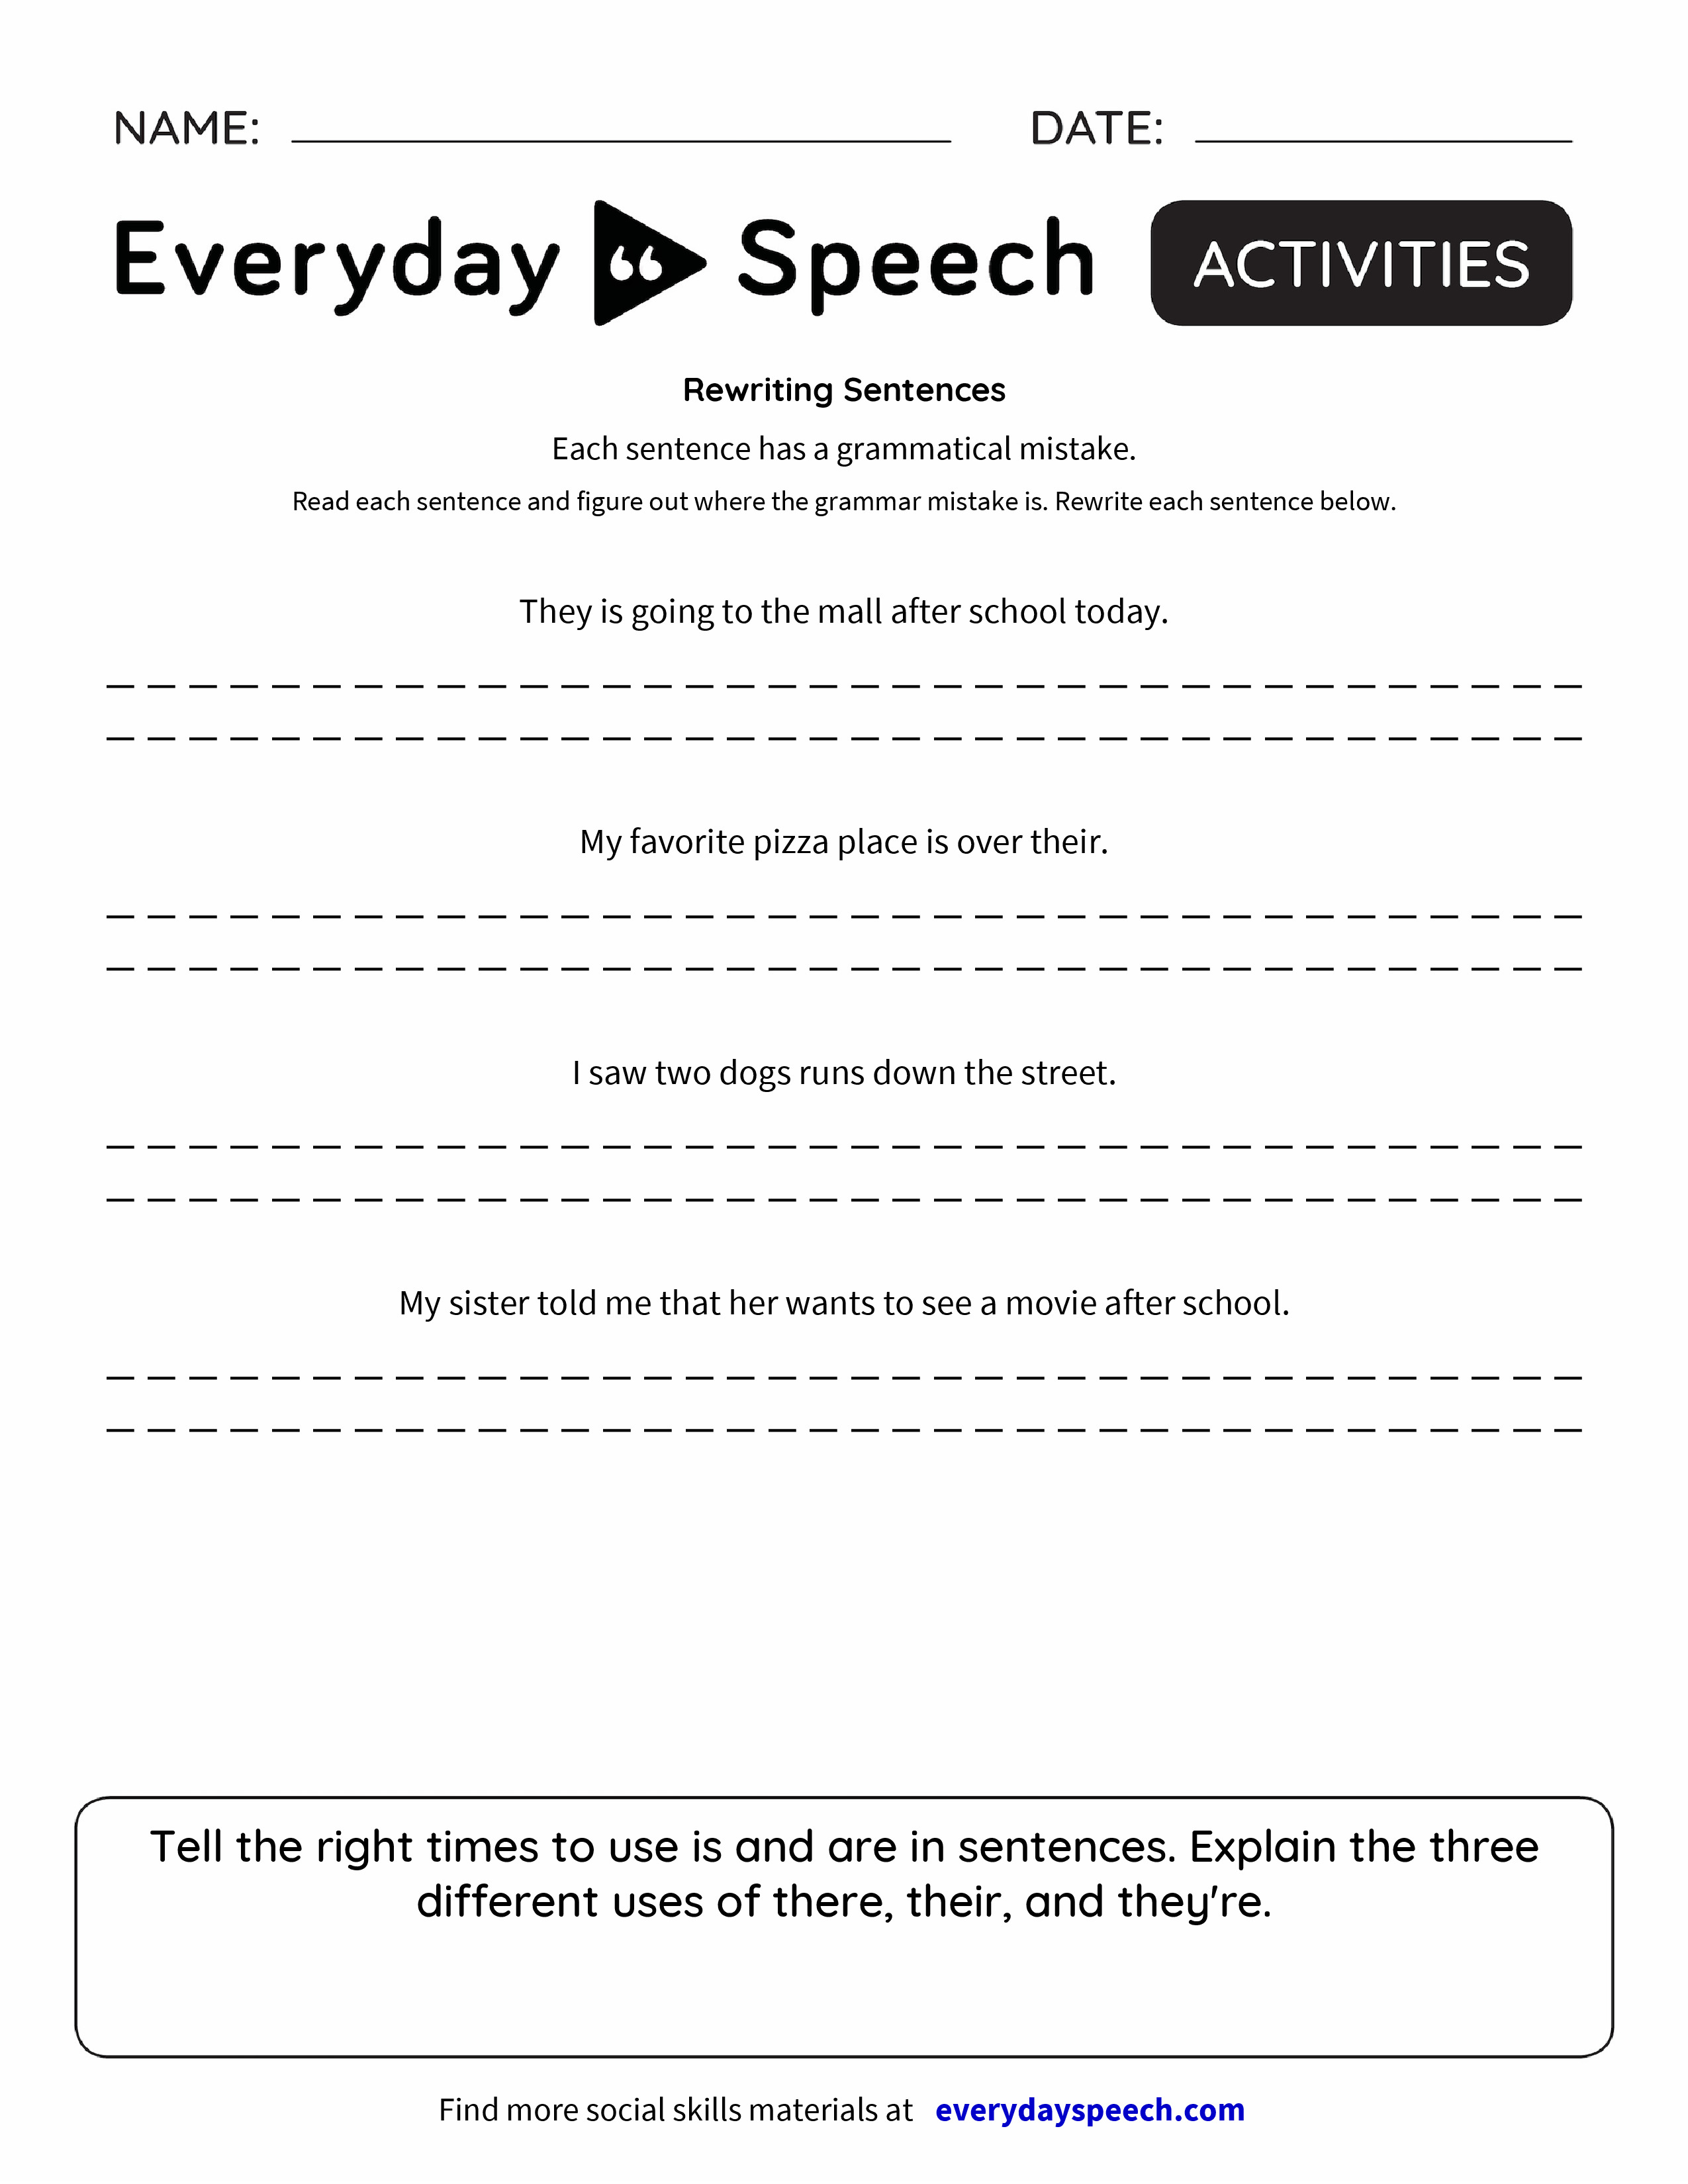 rewriting-sentences-everyday-speech-everyday-speech